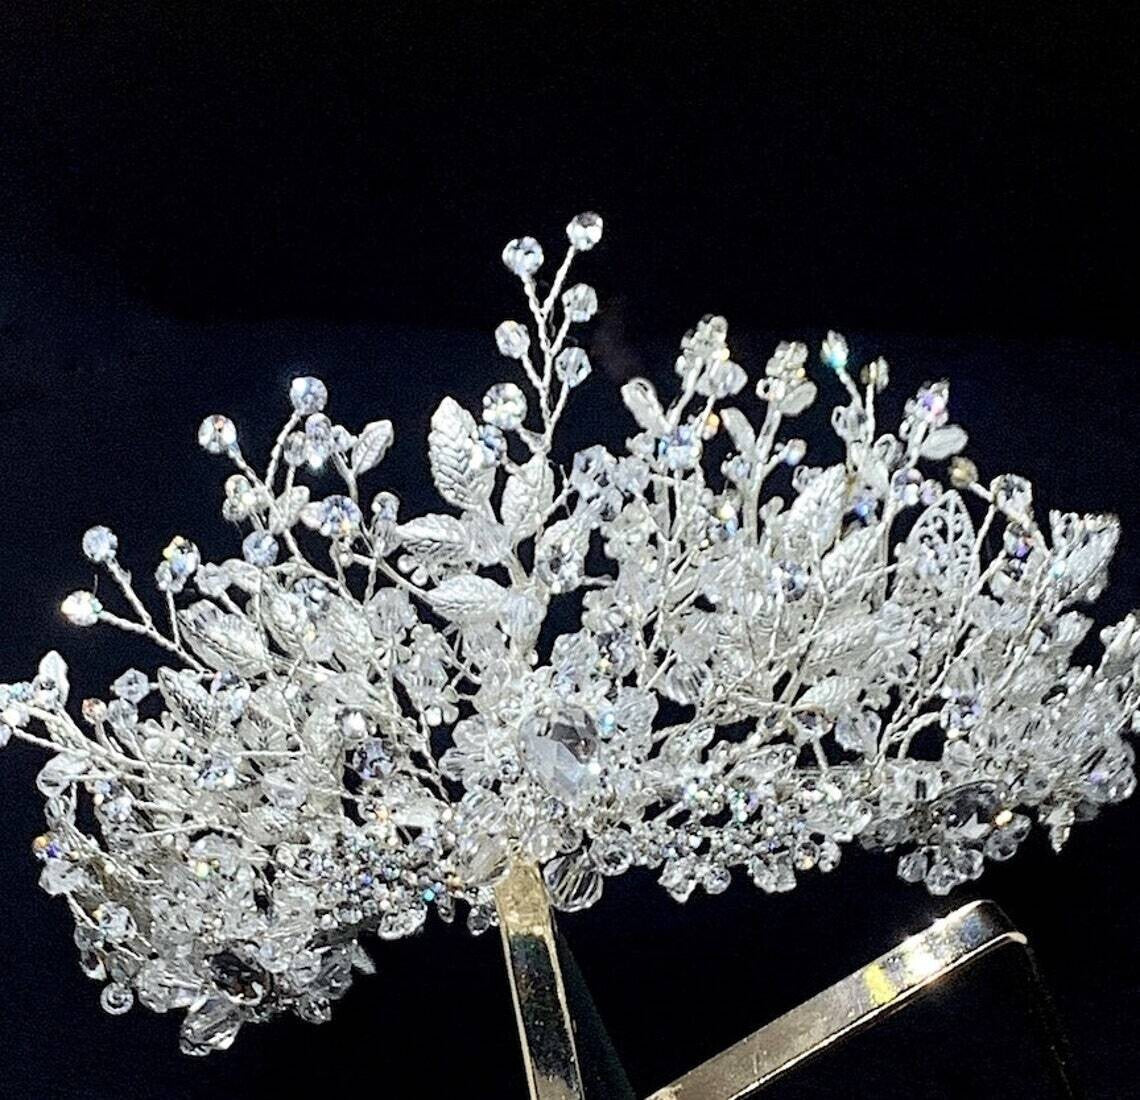 Giuseppa, Swarovski Crystal Wedding Crown Tiara